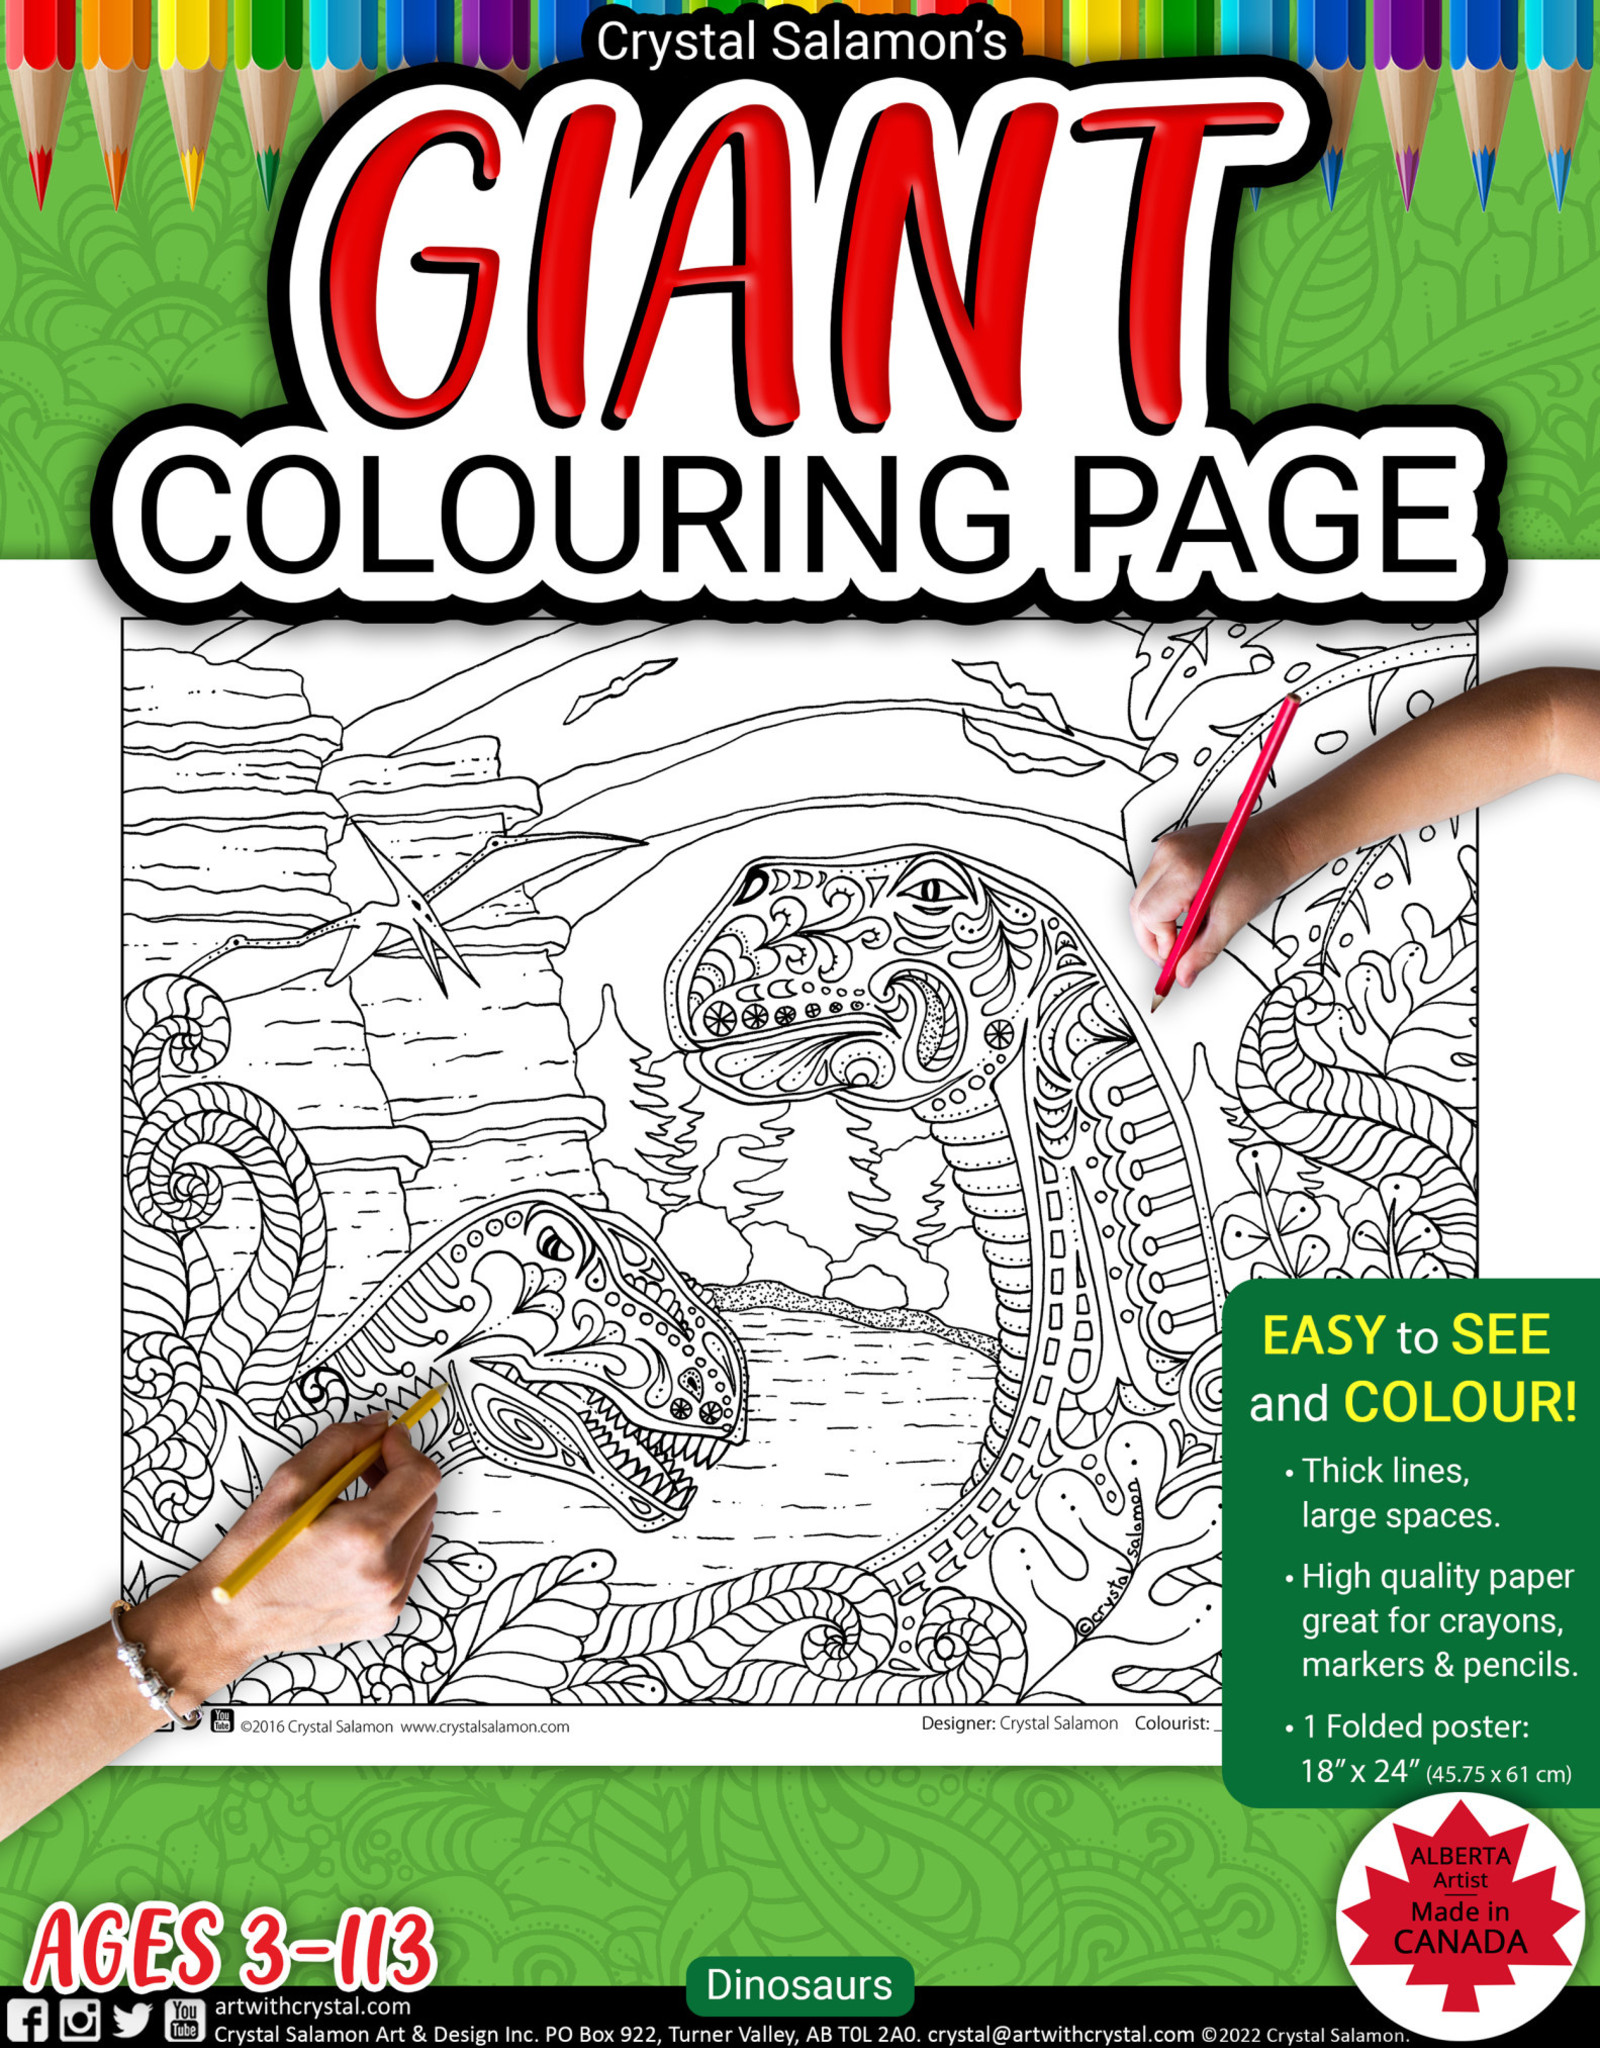 Crystal Salamon Giant Colouring Page - Dinosaur 24" x 18"